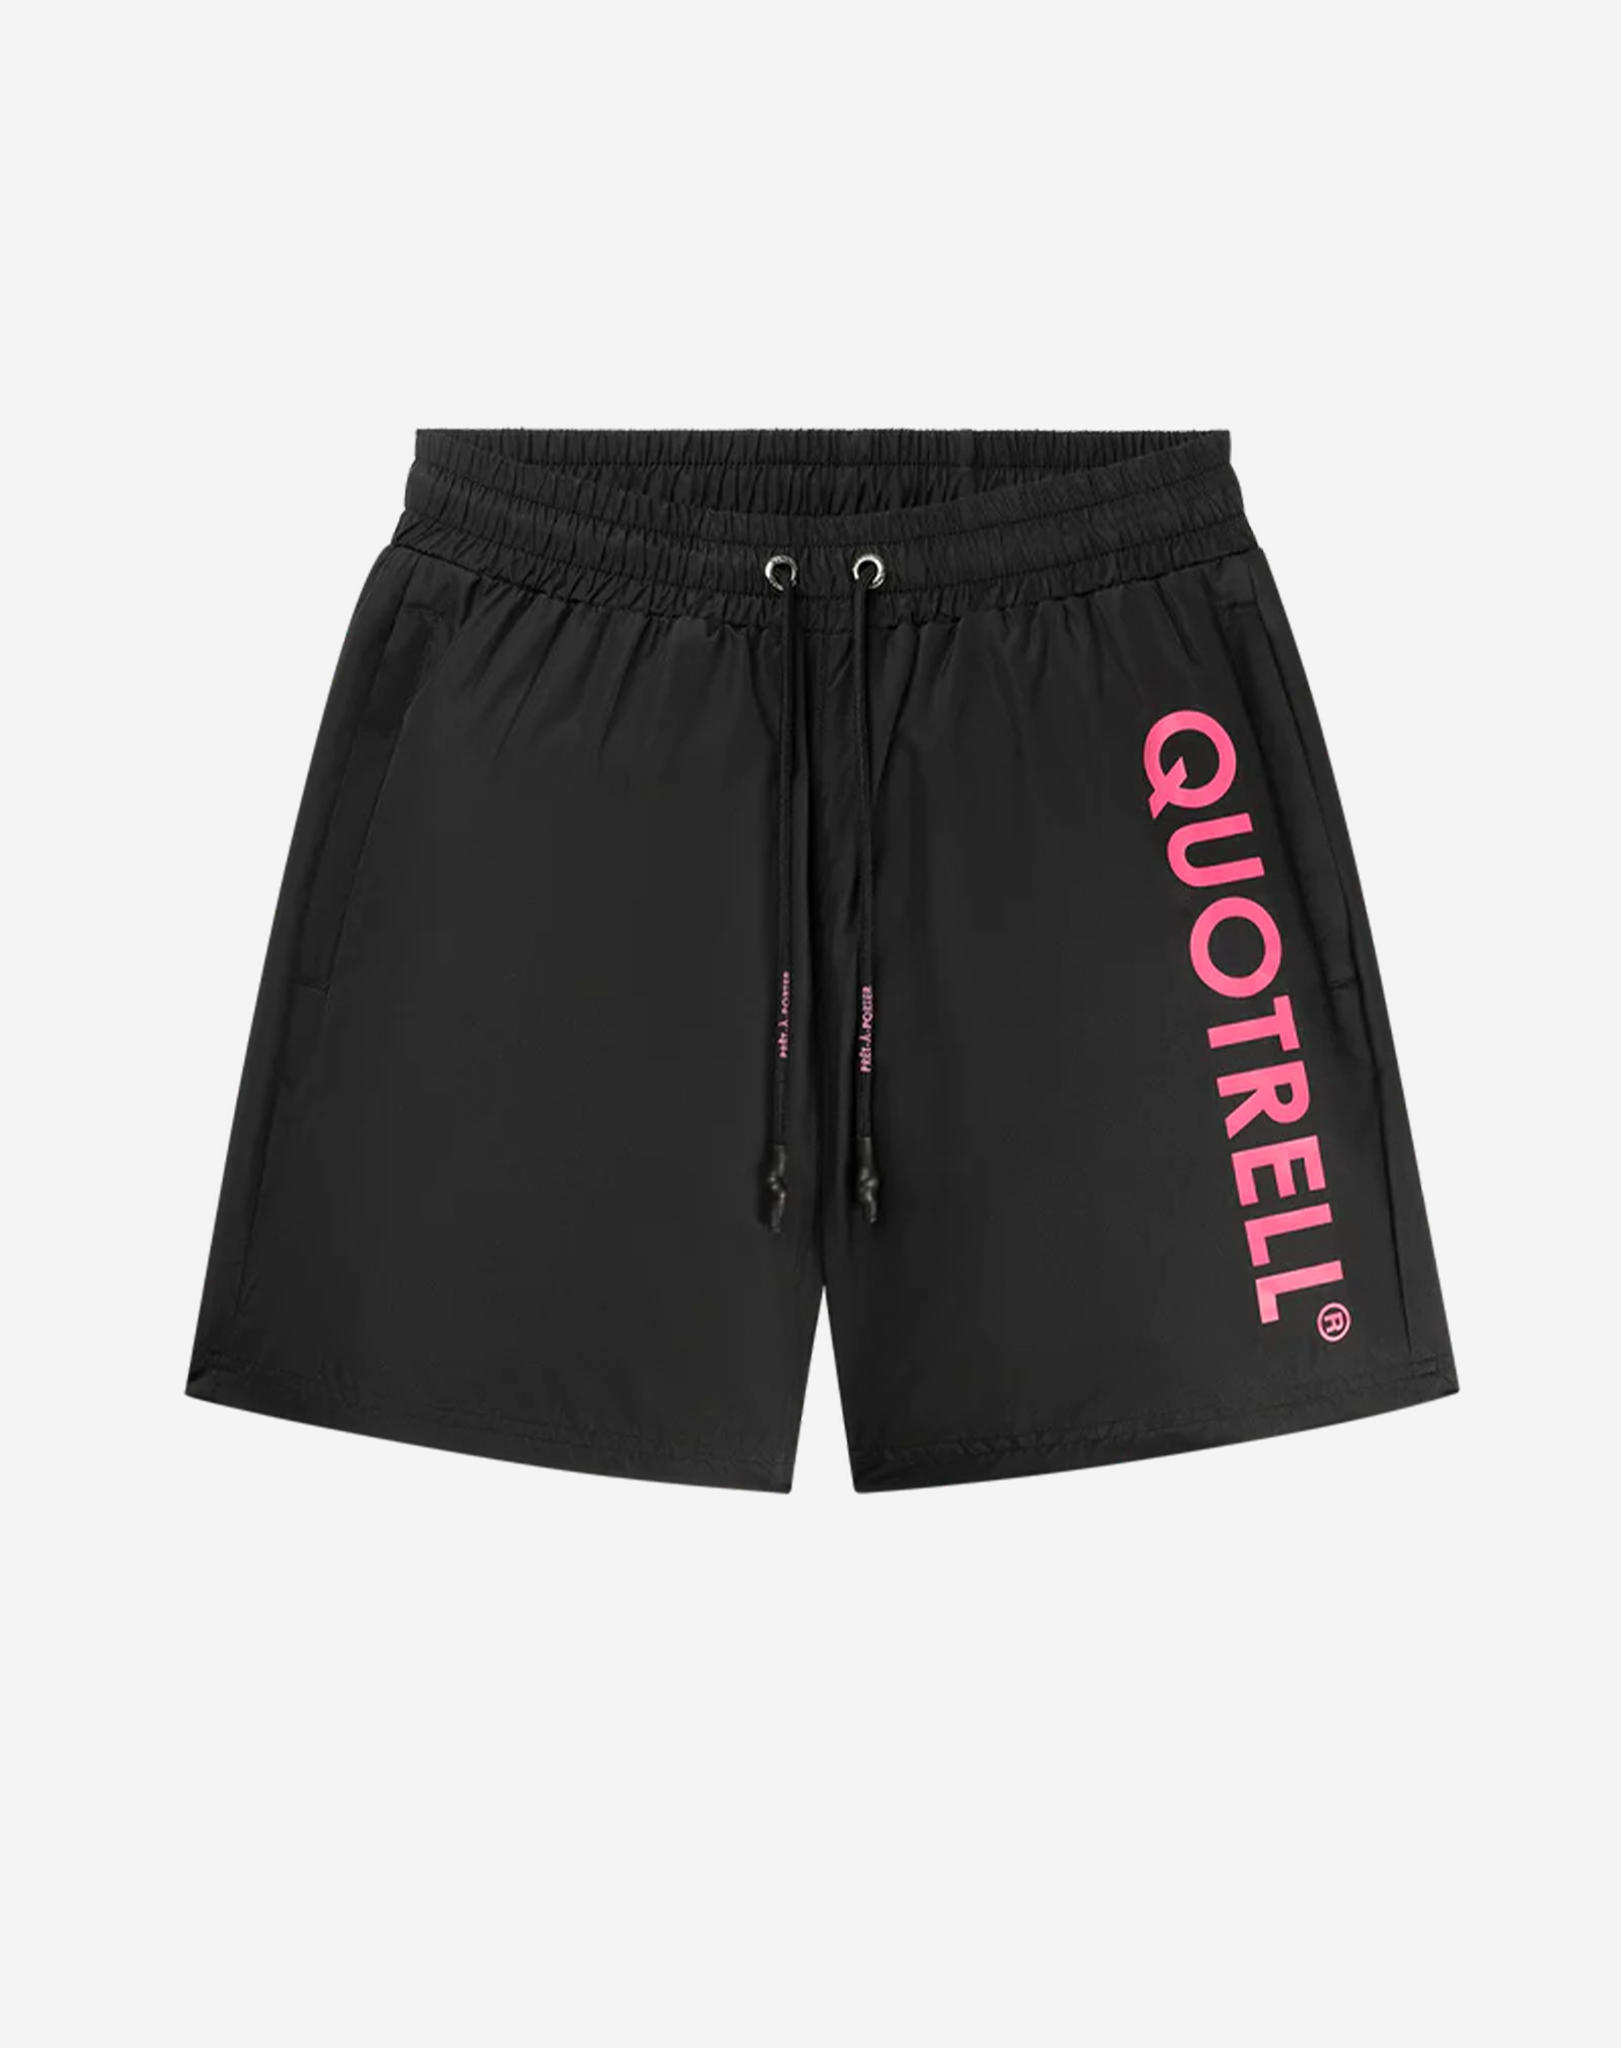 Quotrell Maui Swimshorts Zwart - Neon Roze